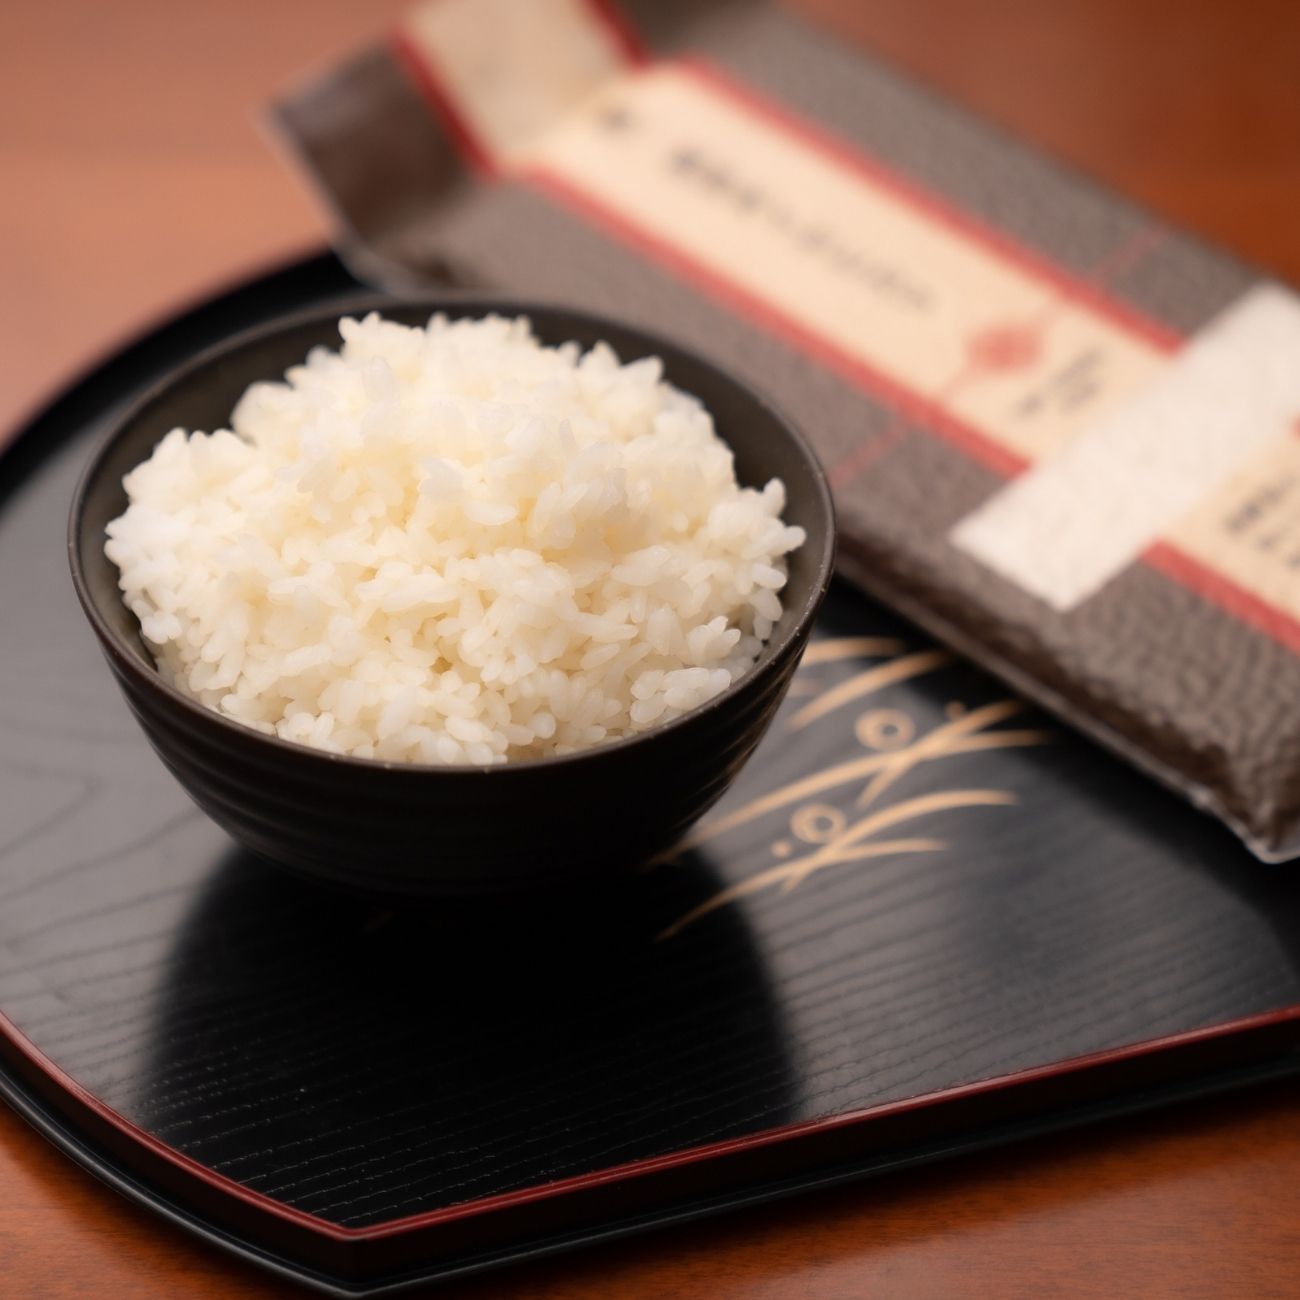 Japanese Gifts Set Isehikari Rice & Café Genshin Organic Premium Roasted Brown Rice Coffee (8 tetra bags)